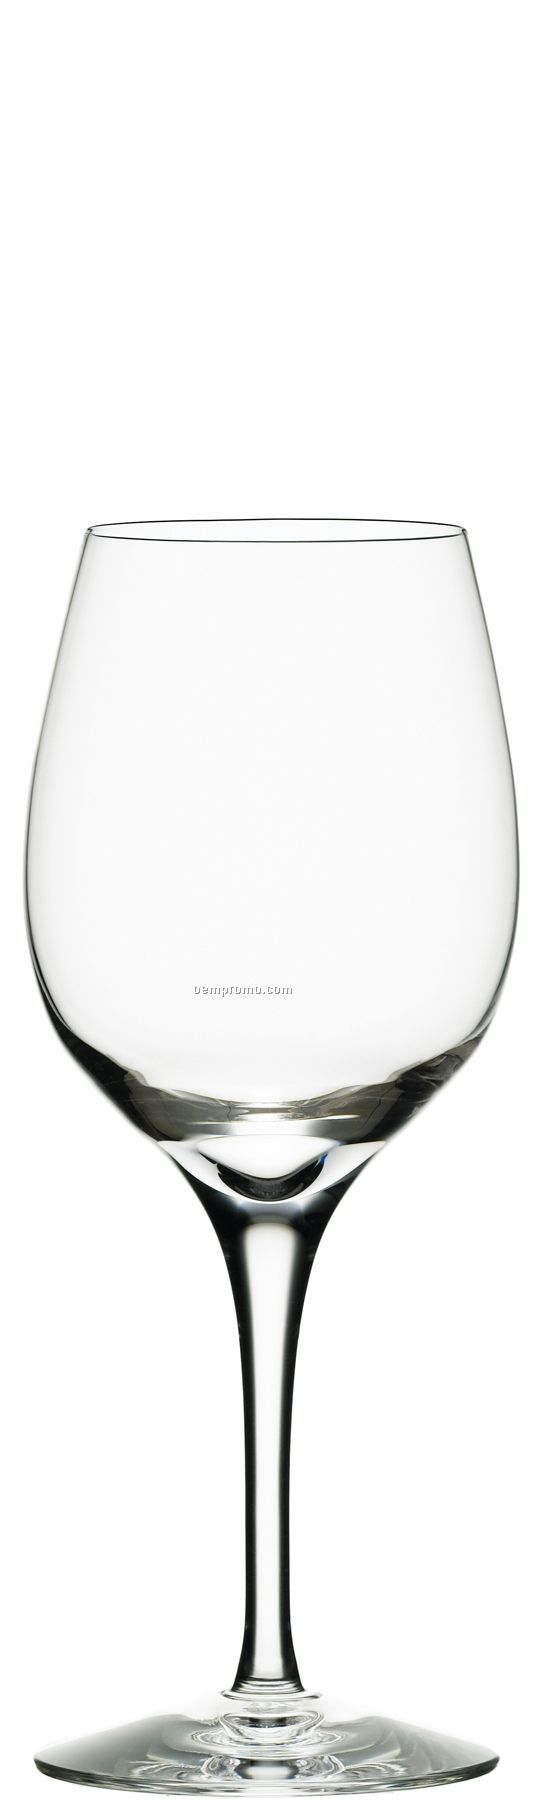 Merlot Crystal 10 Oz. Wine Glass By Erika Lagerbielke